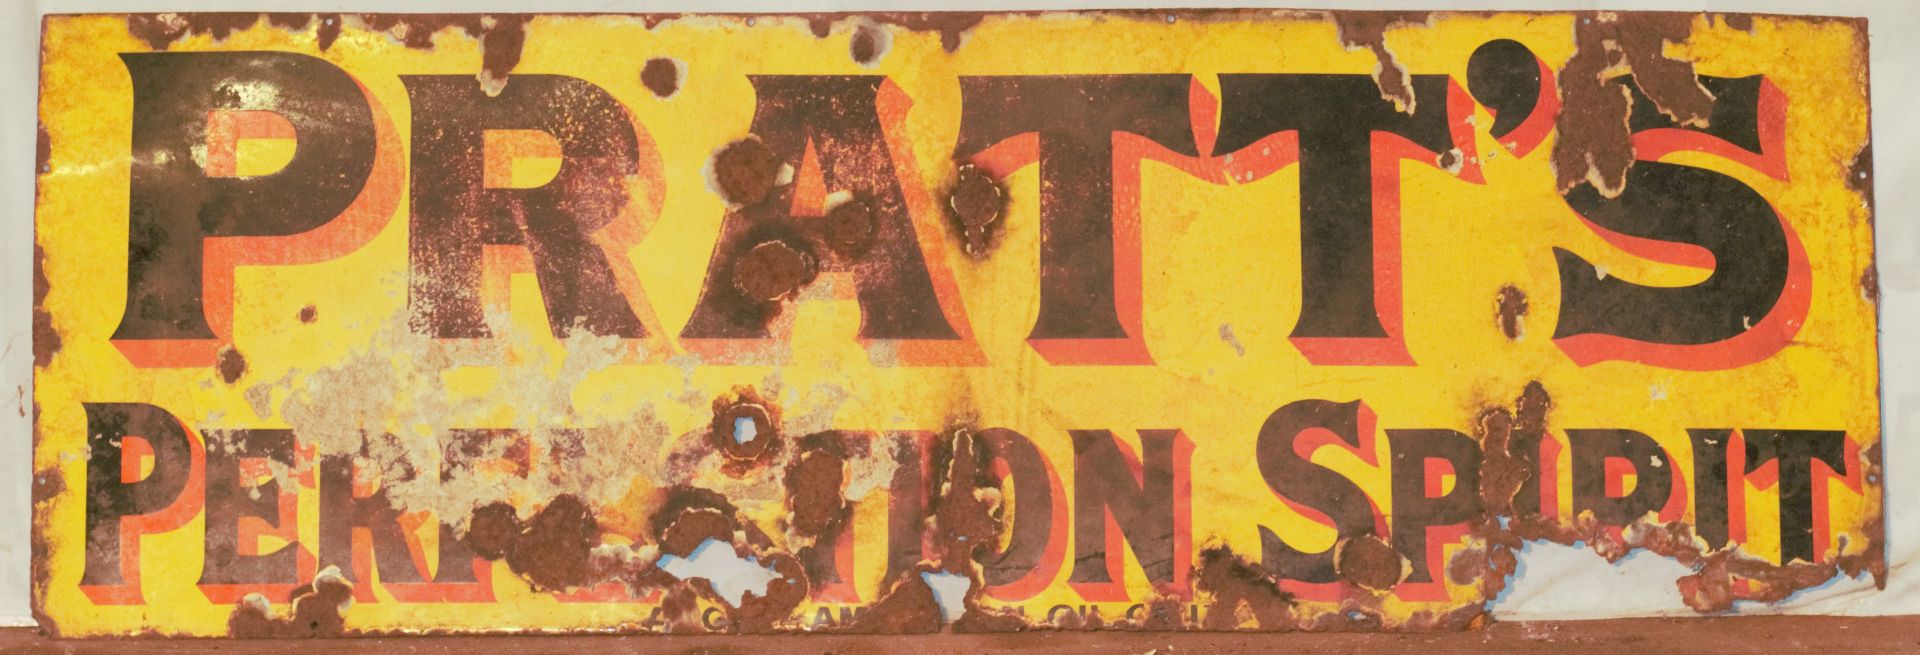 Vintage enamel advertising sign 'Pratt's Perfection Spirit', 46 x 133cm PLEASE NOTE this lot is